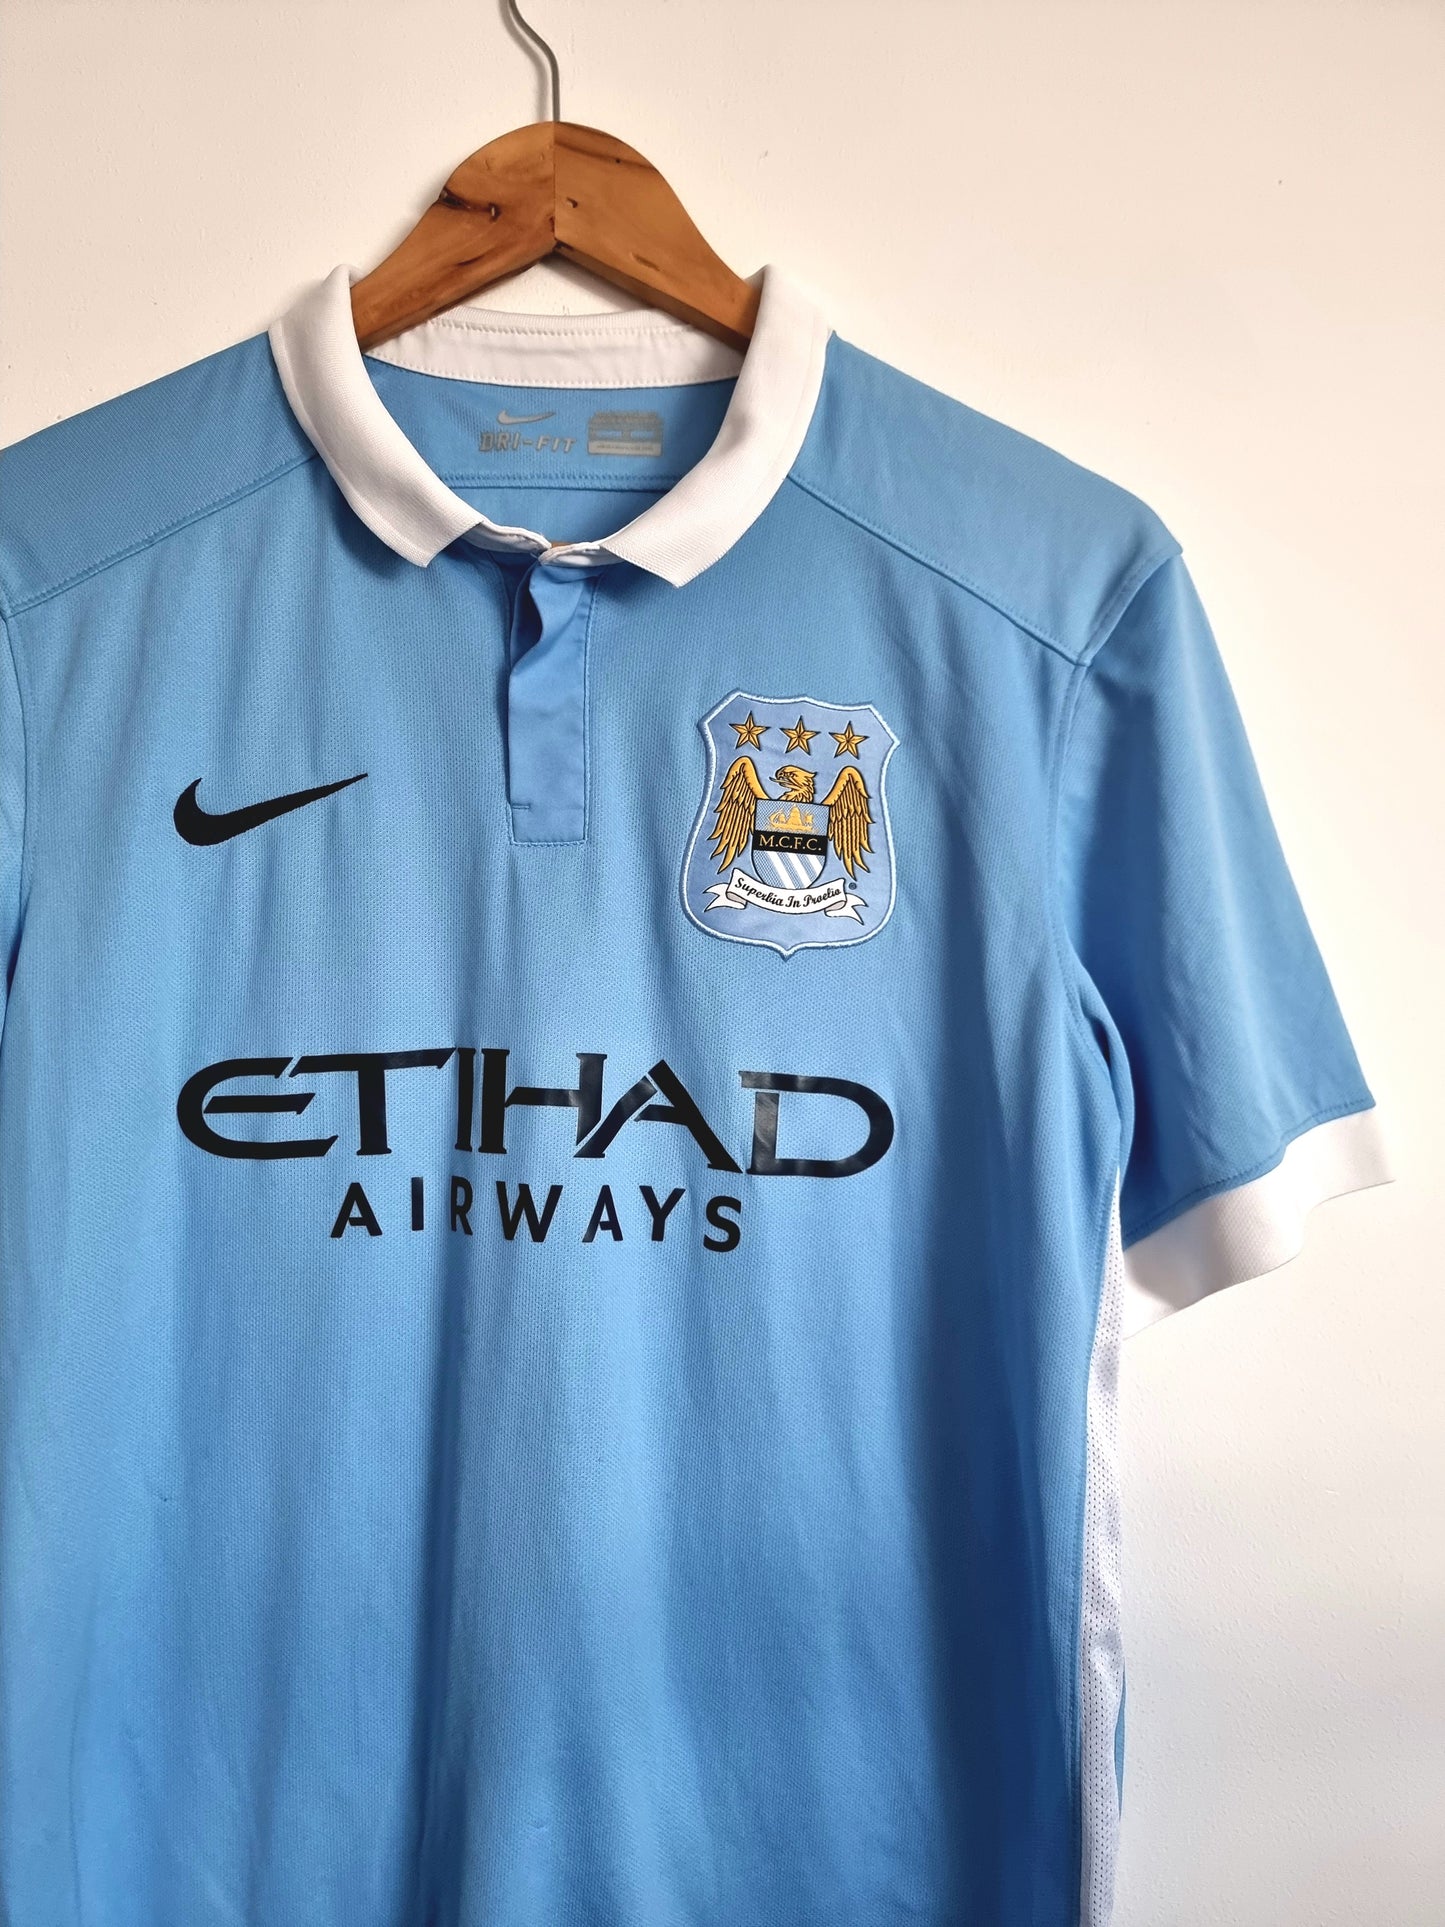 Nike Manchester City 15/16 Home Shirt Medium